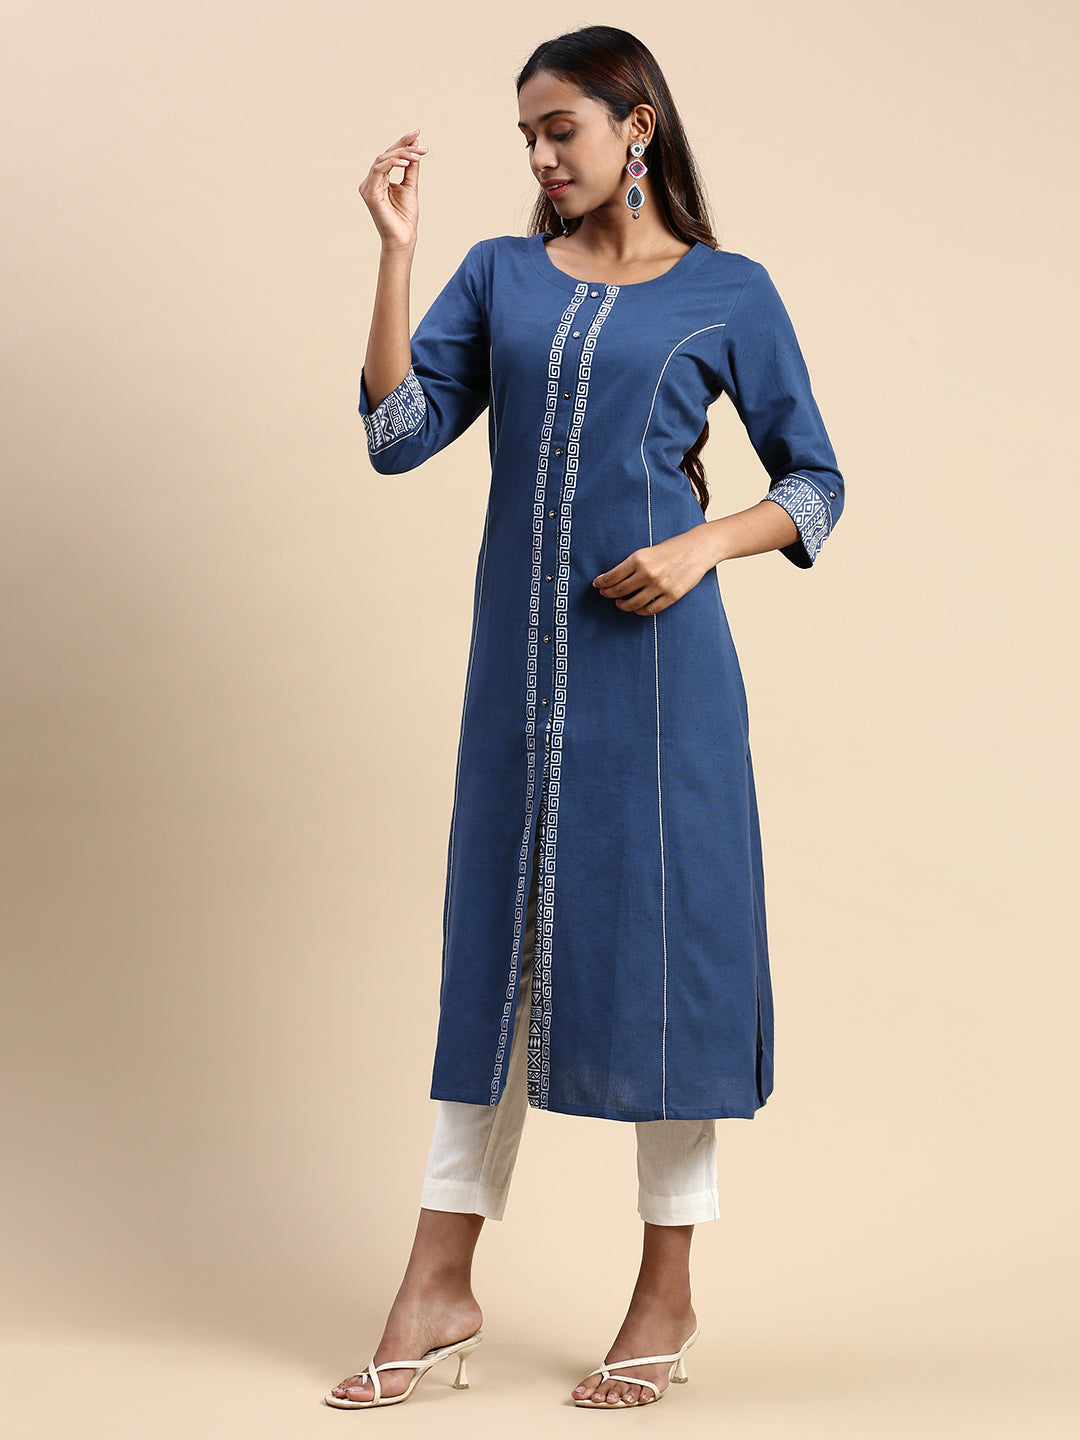 Ladies 3/4th Sleeve Printed Denim Kurti, Size: S-XL at Rs 450 in Delhi